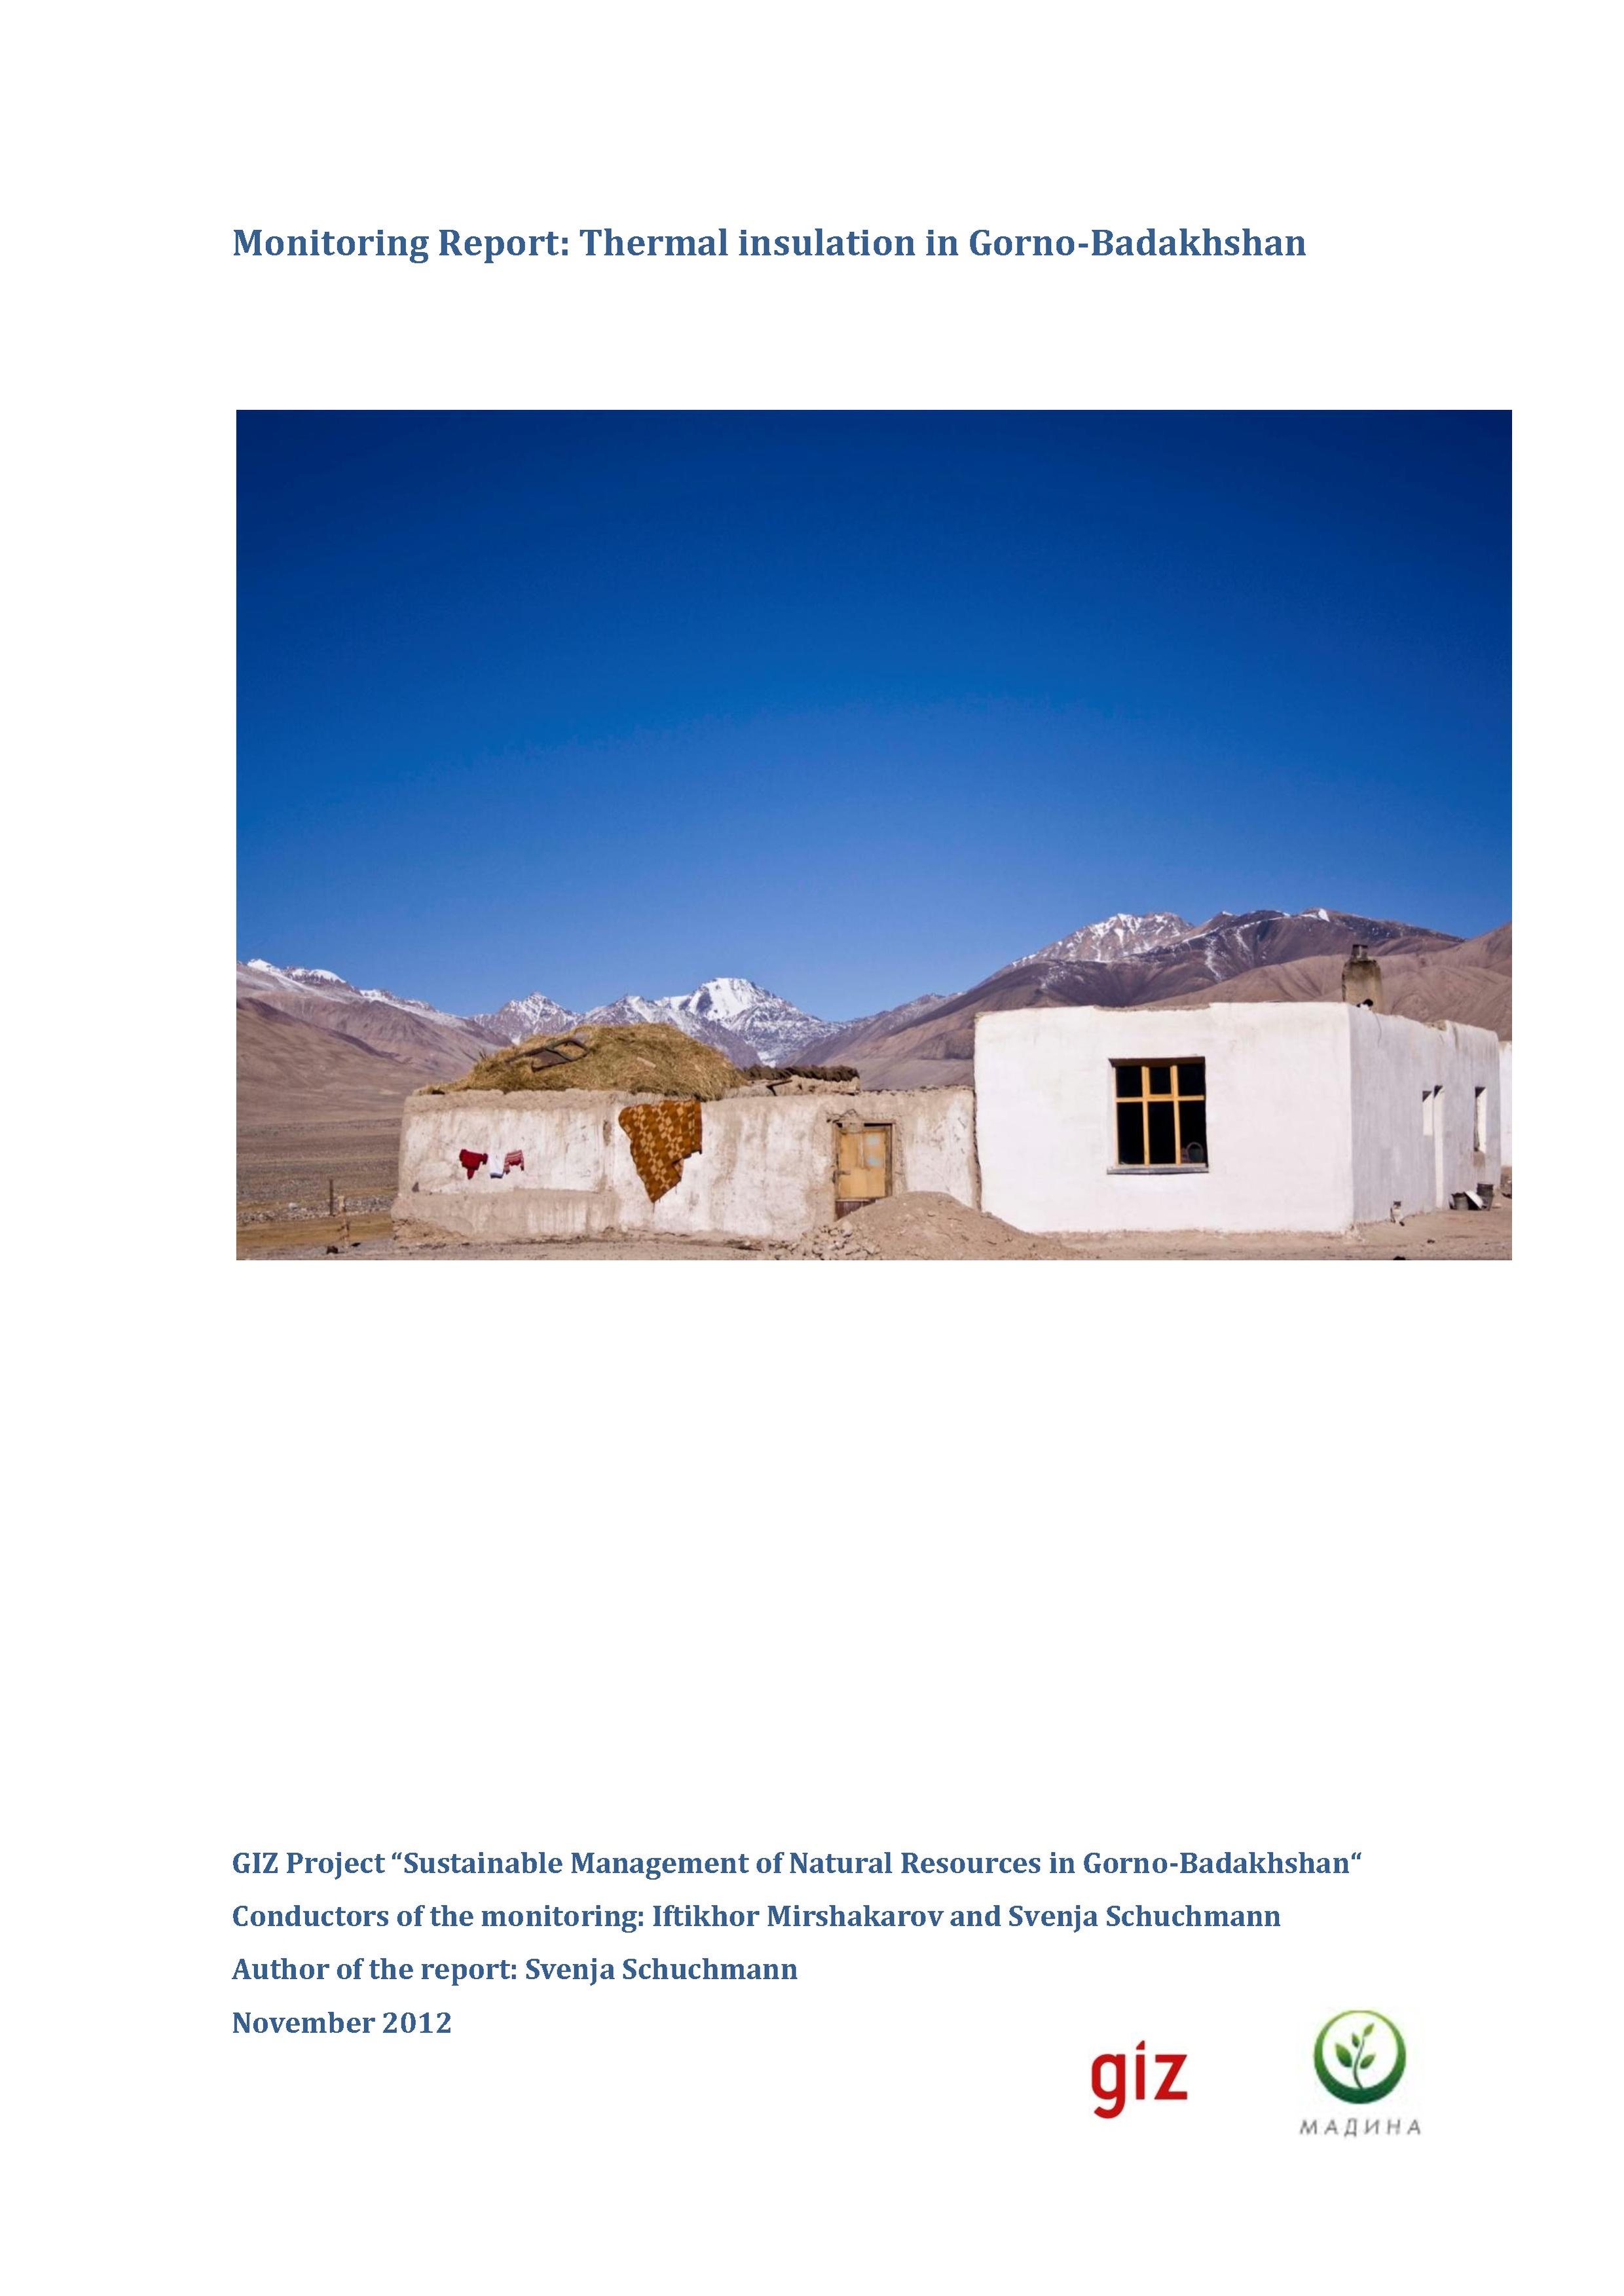 GIZ (2012): Monitoring Report: Thermal insulation in Gorno-Badakhshan